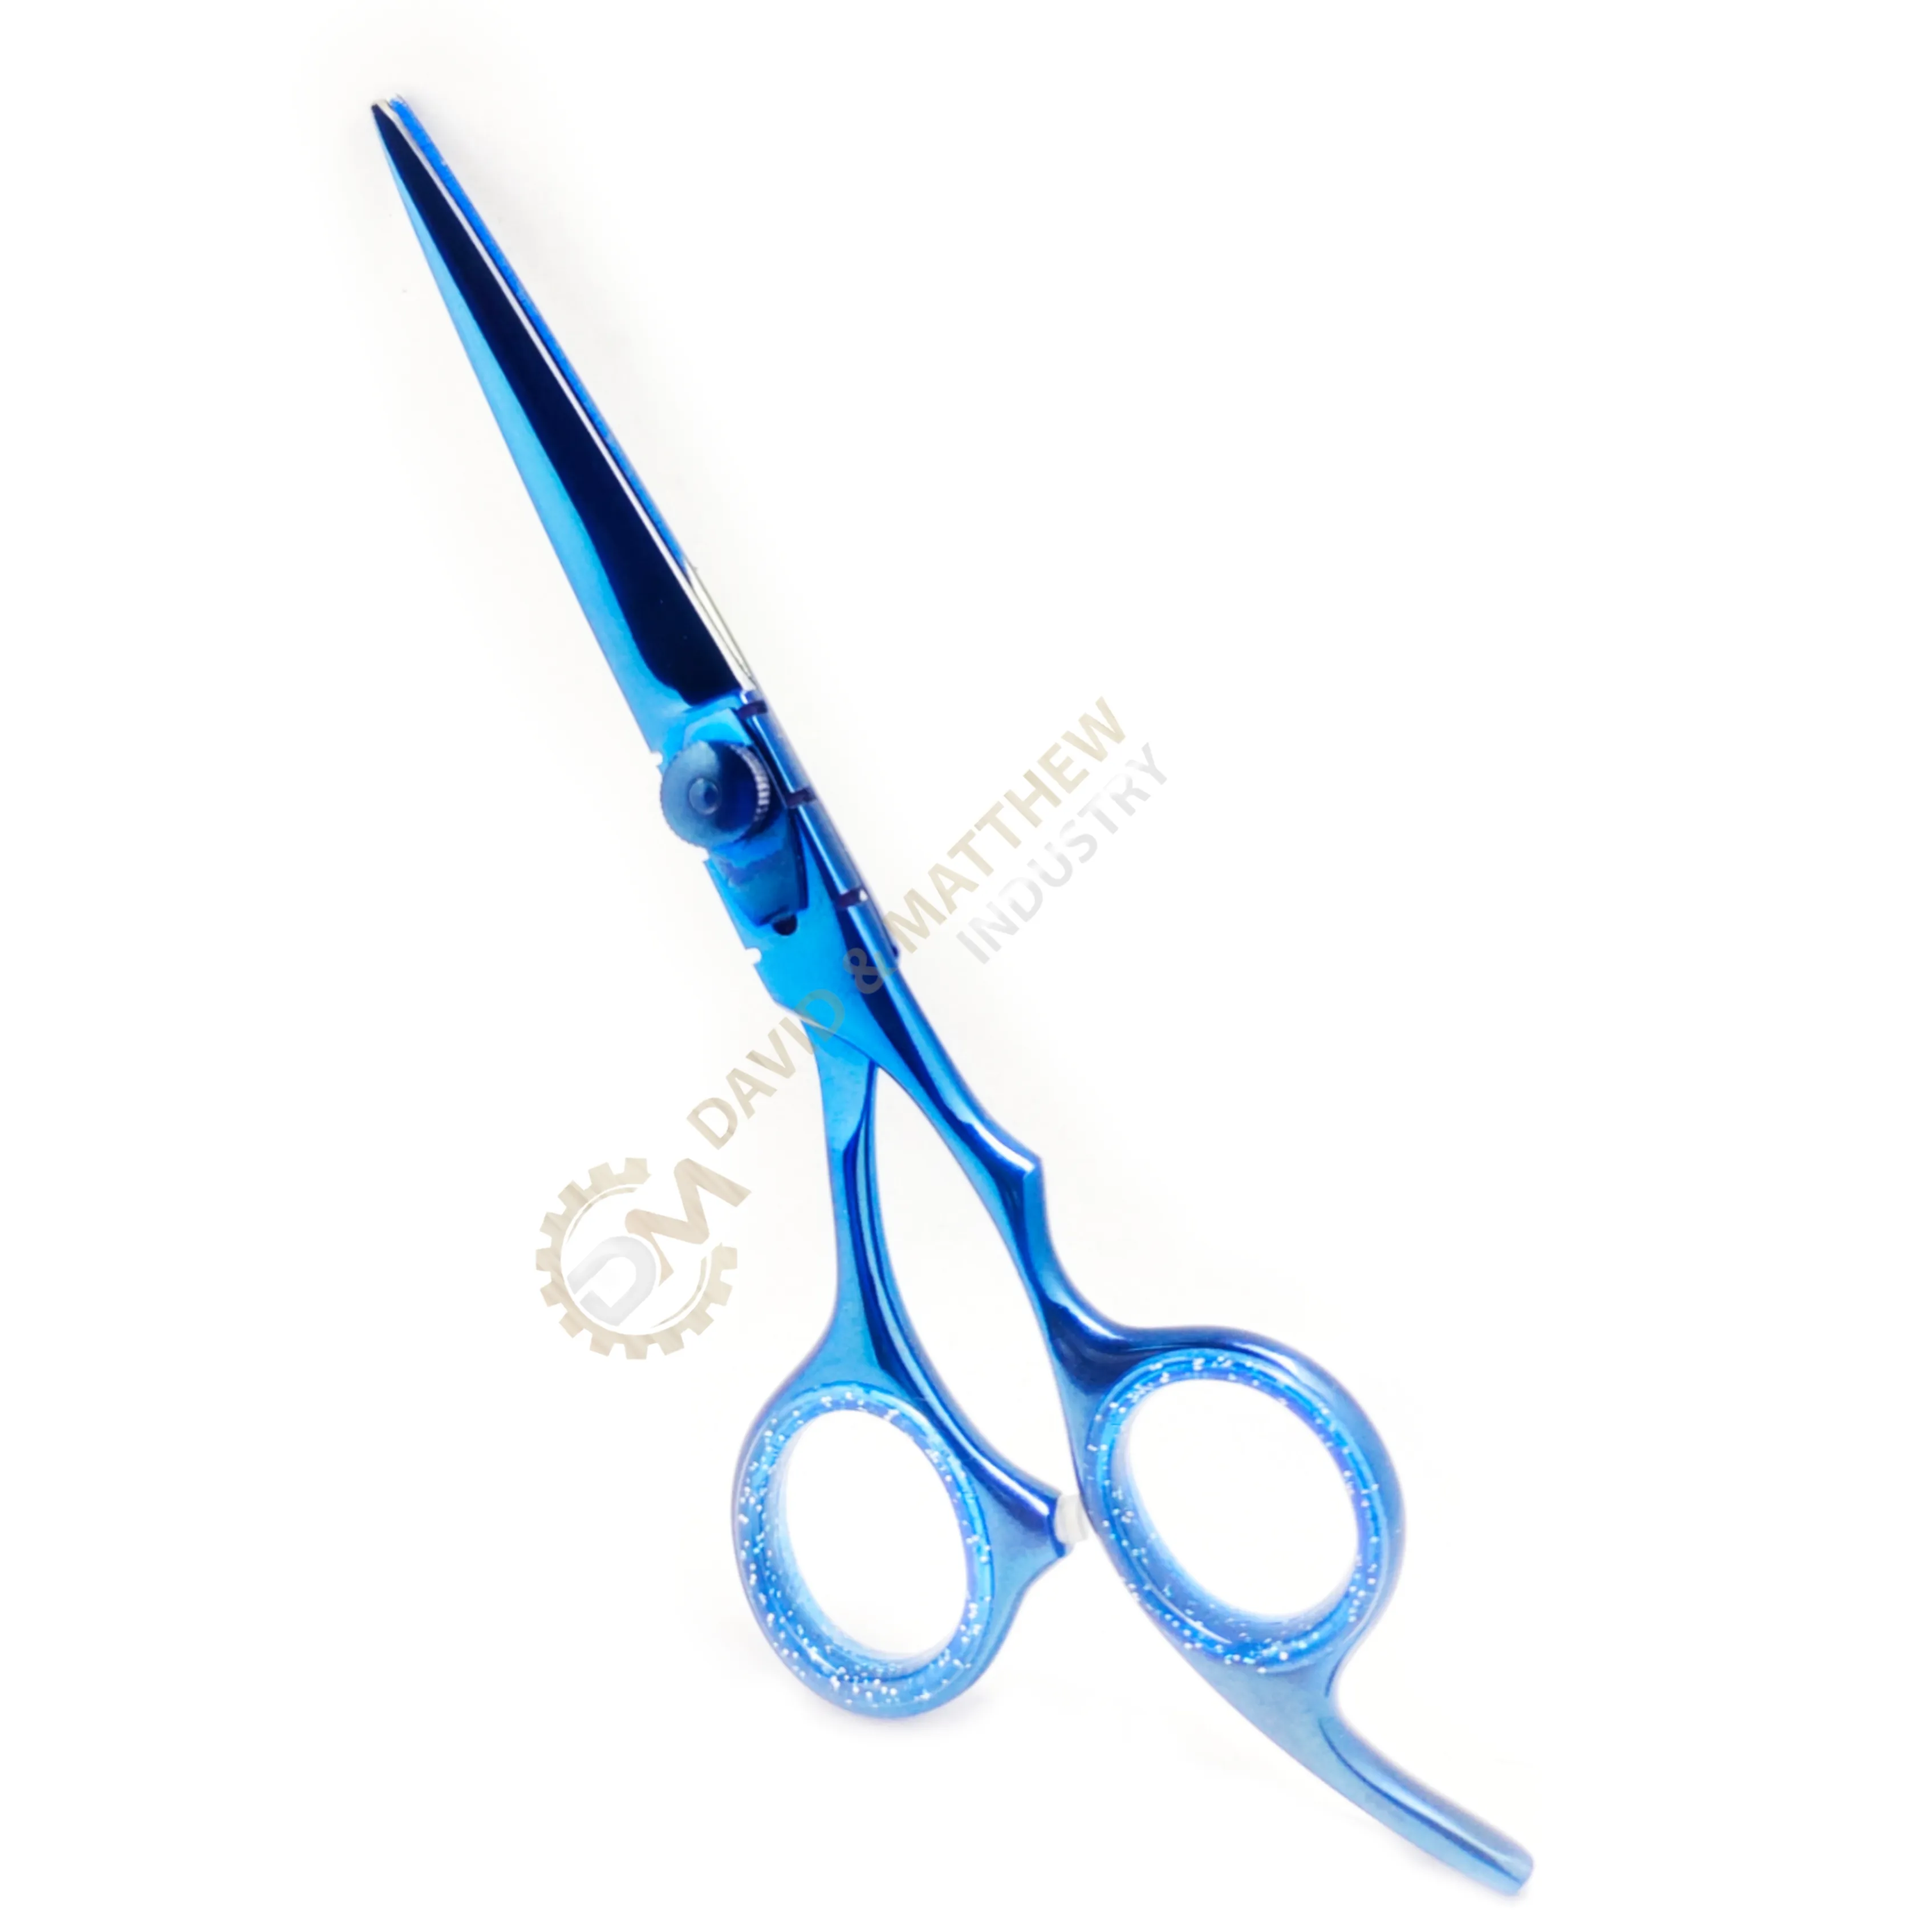 Razor Edge Stainless Steel Barber Hair Cutting Scissor Shears High Quality Hair Styling Trimming Scissors